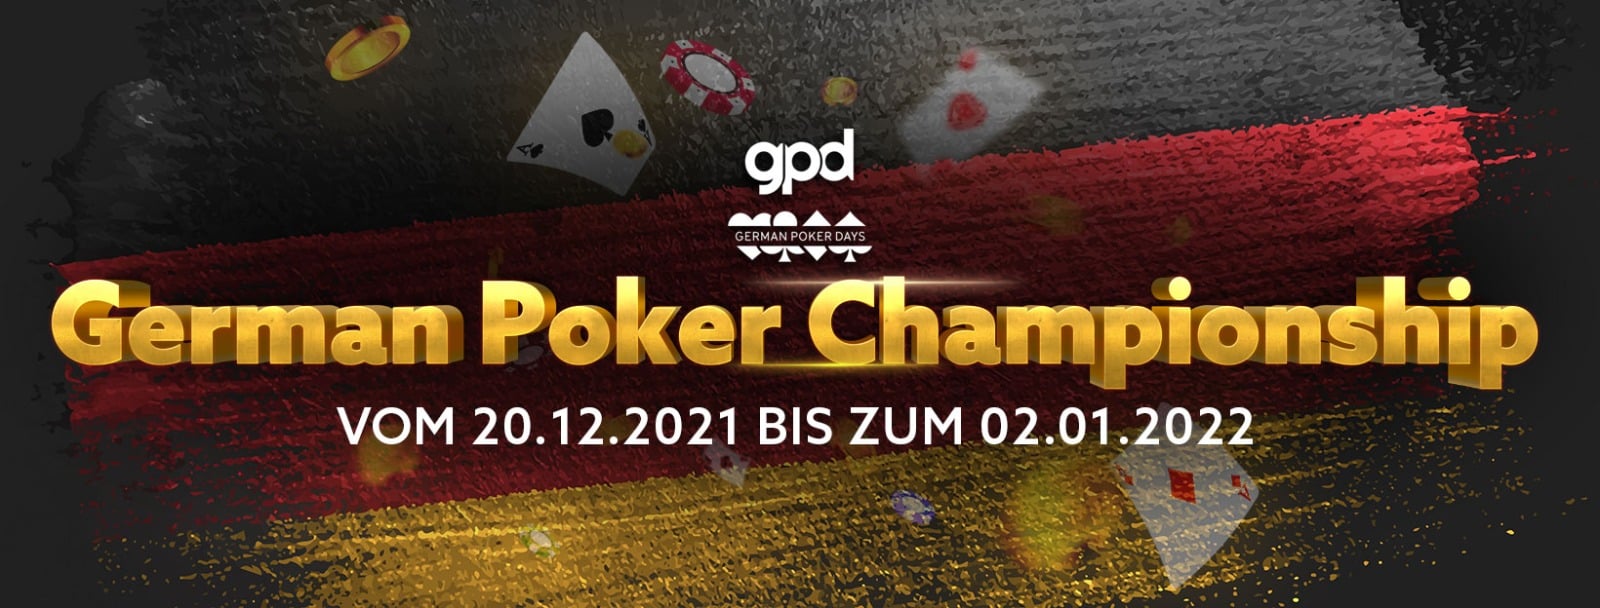 German Poker Championship – Starttag 9